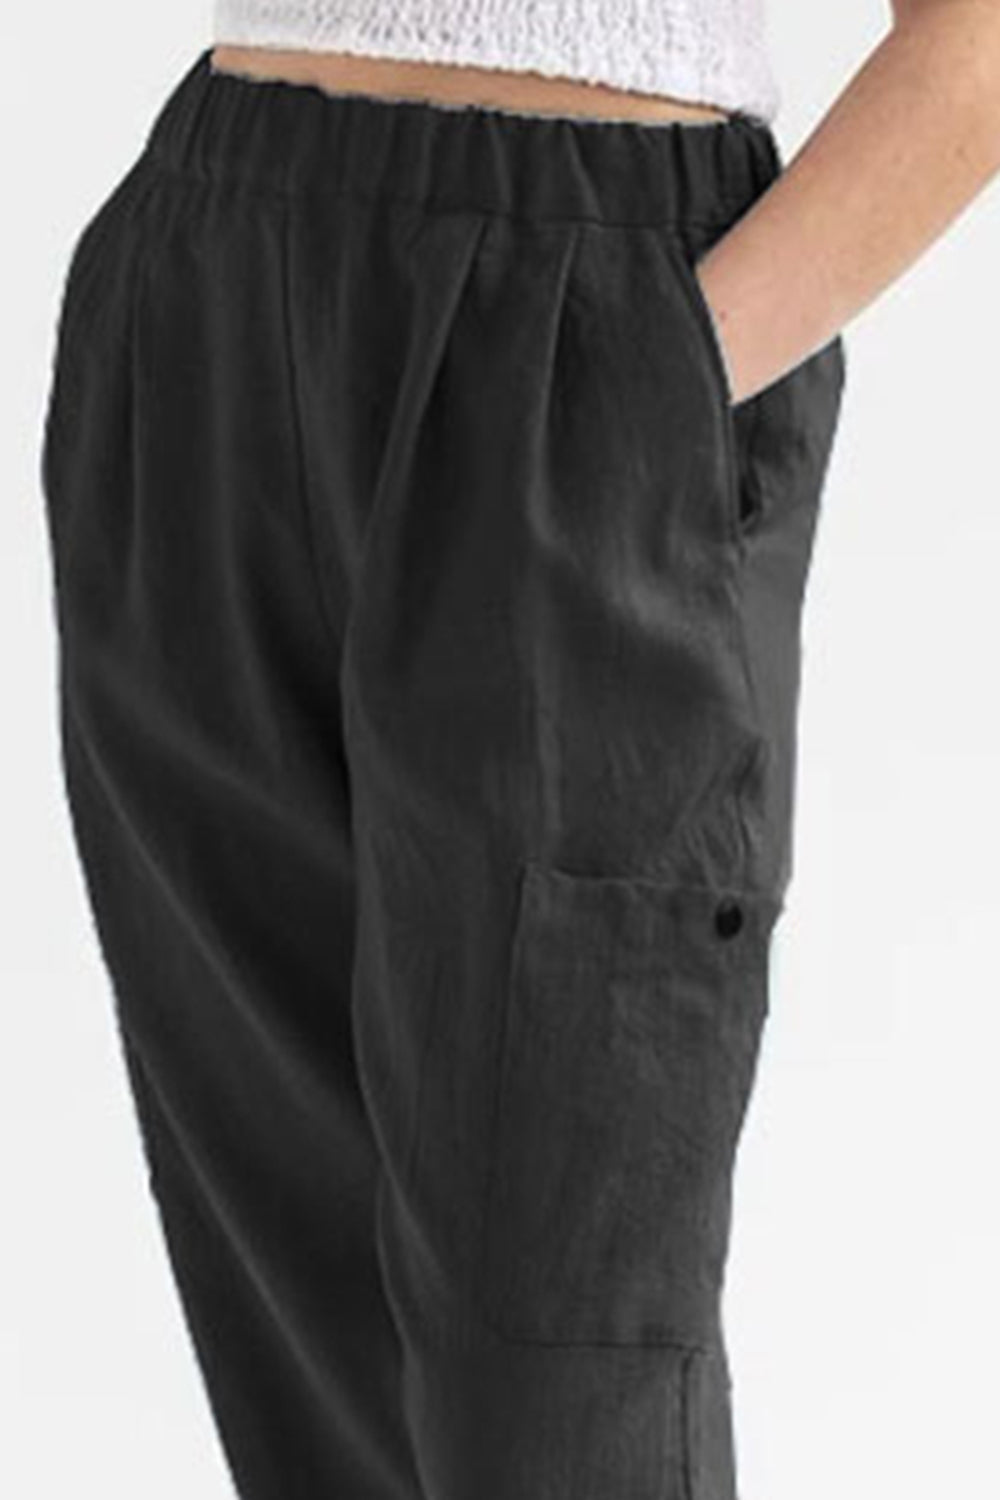 TEEK - Pocketed Elastic Waist Pants PANTS TEEK Trend Black S 